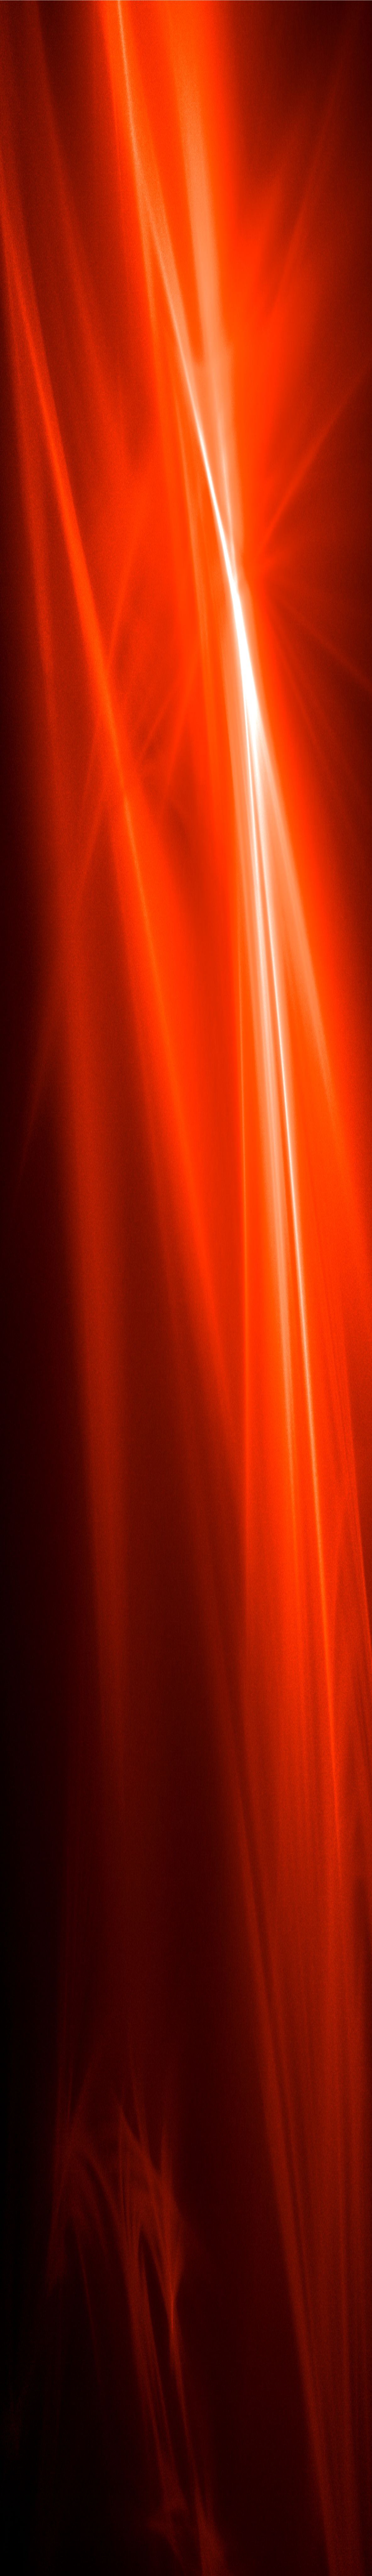 Black background with white, red , orange light flares